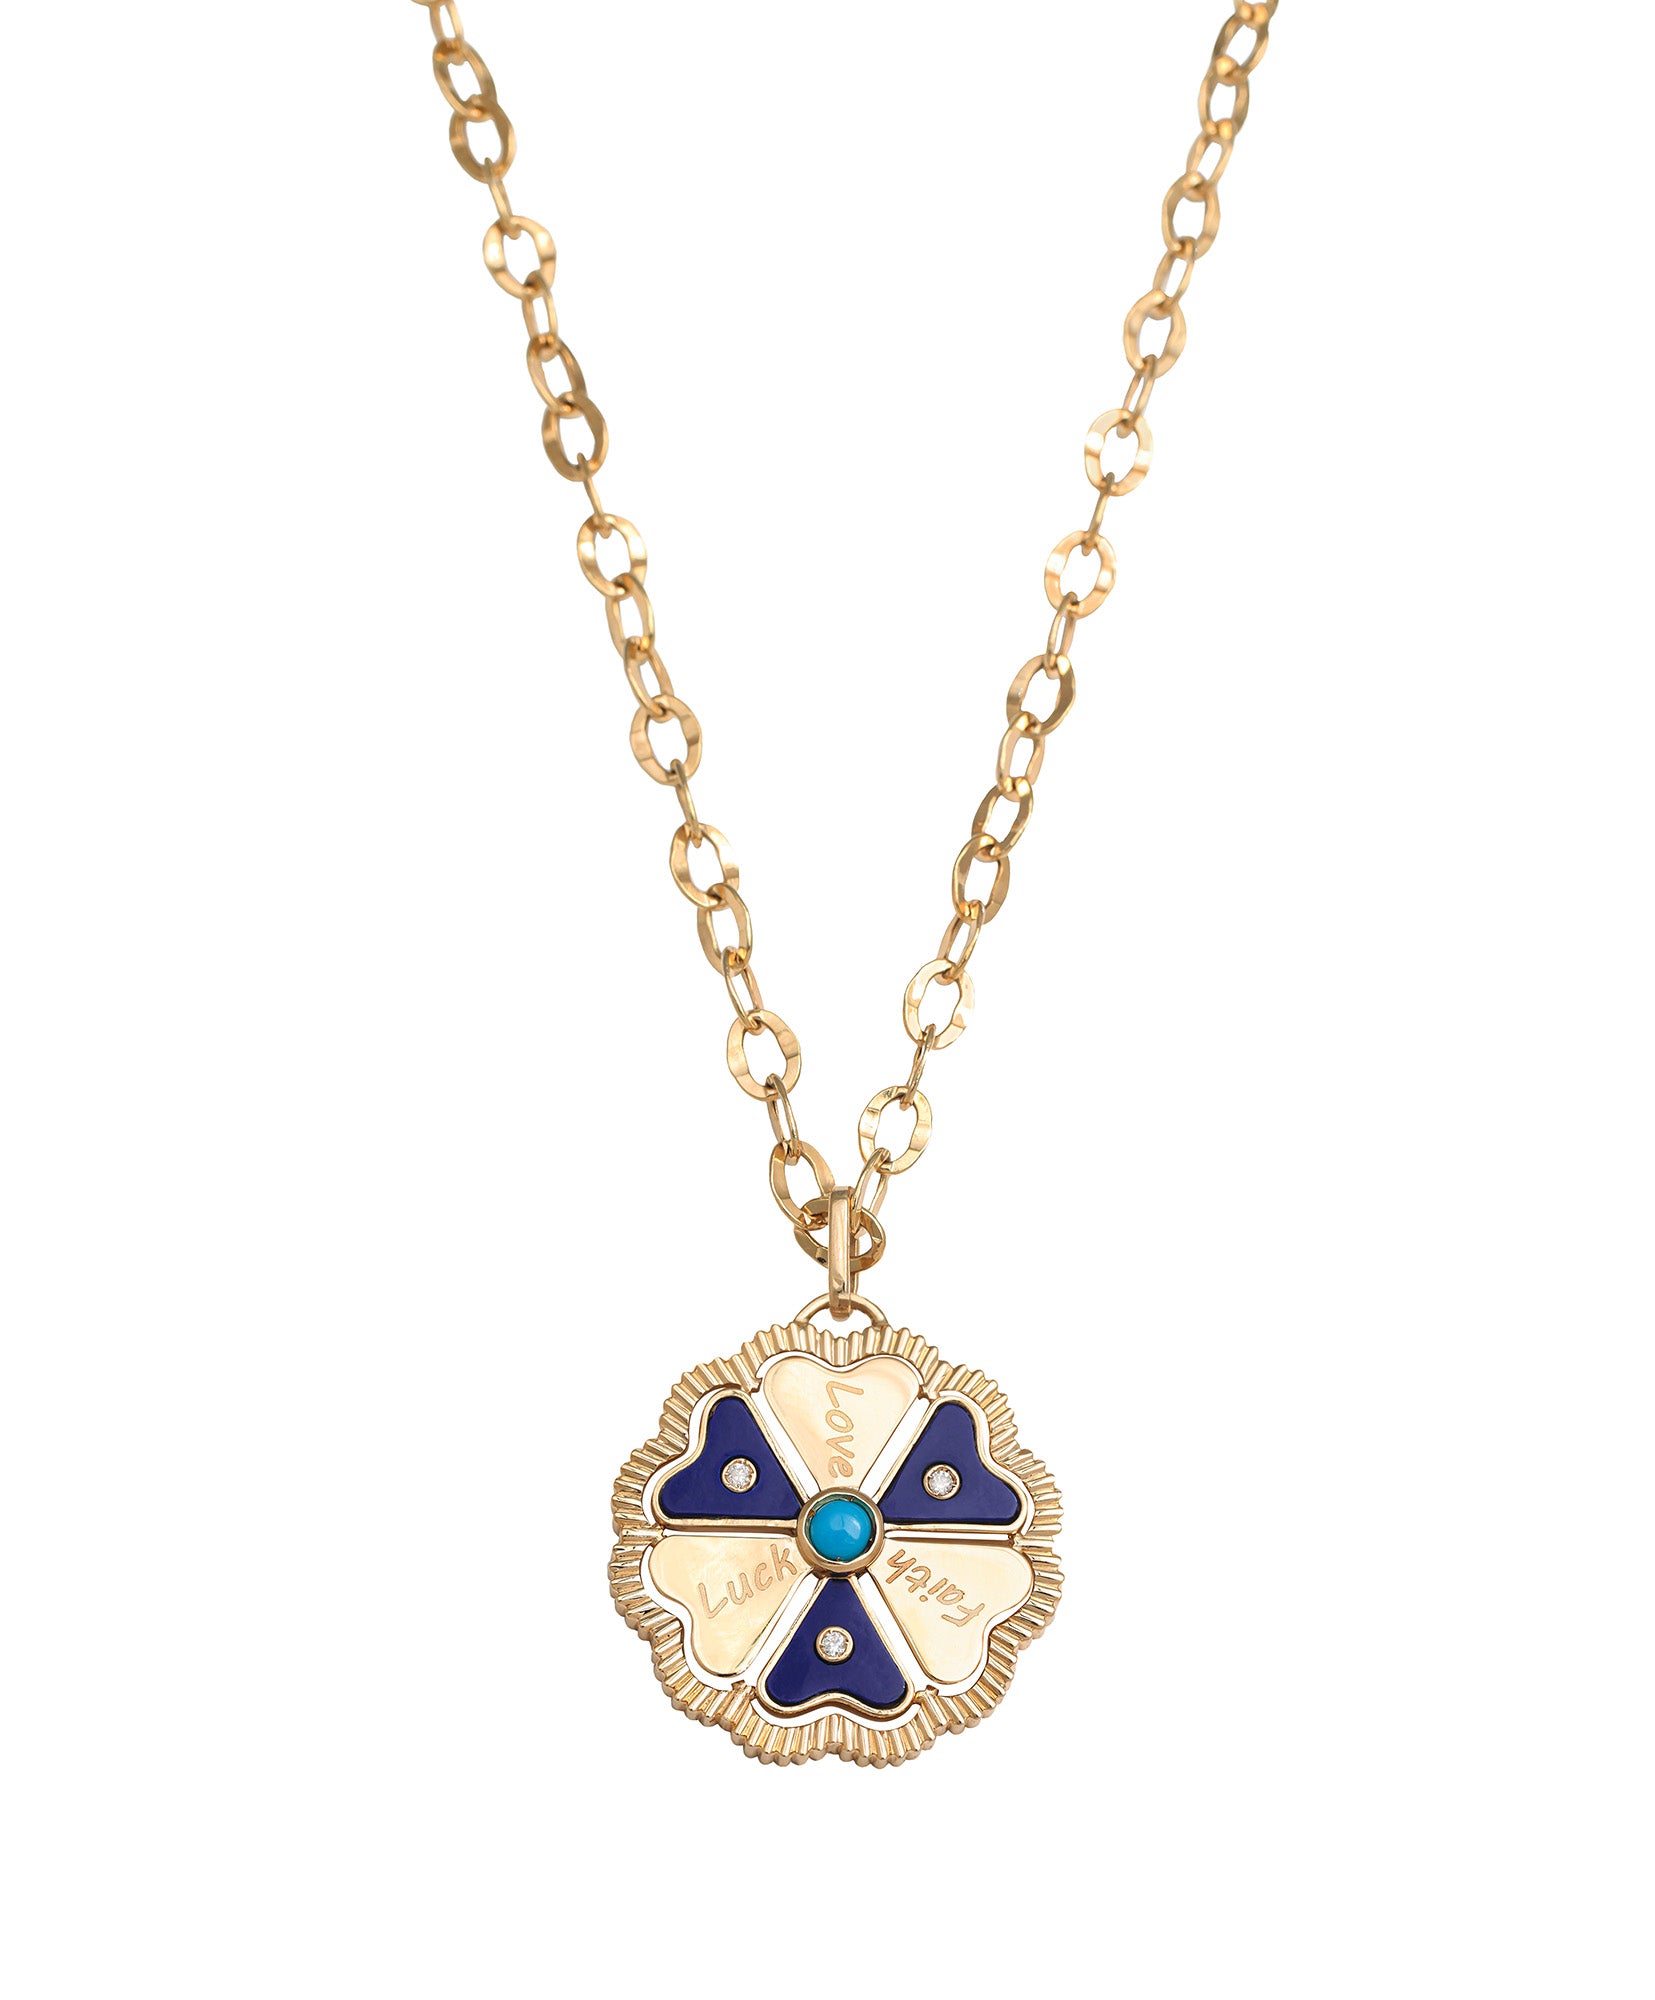 J by boghossian, gold, necklace, white diamond, lapis lazuli, turquoise